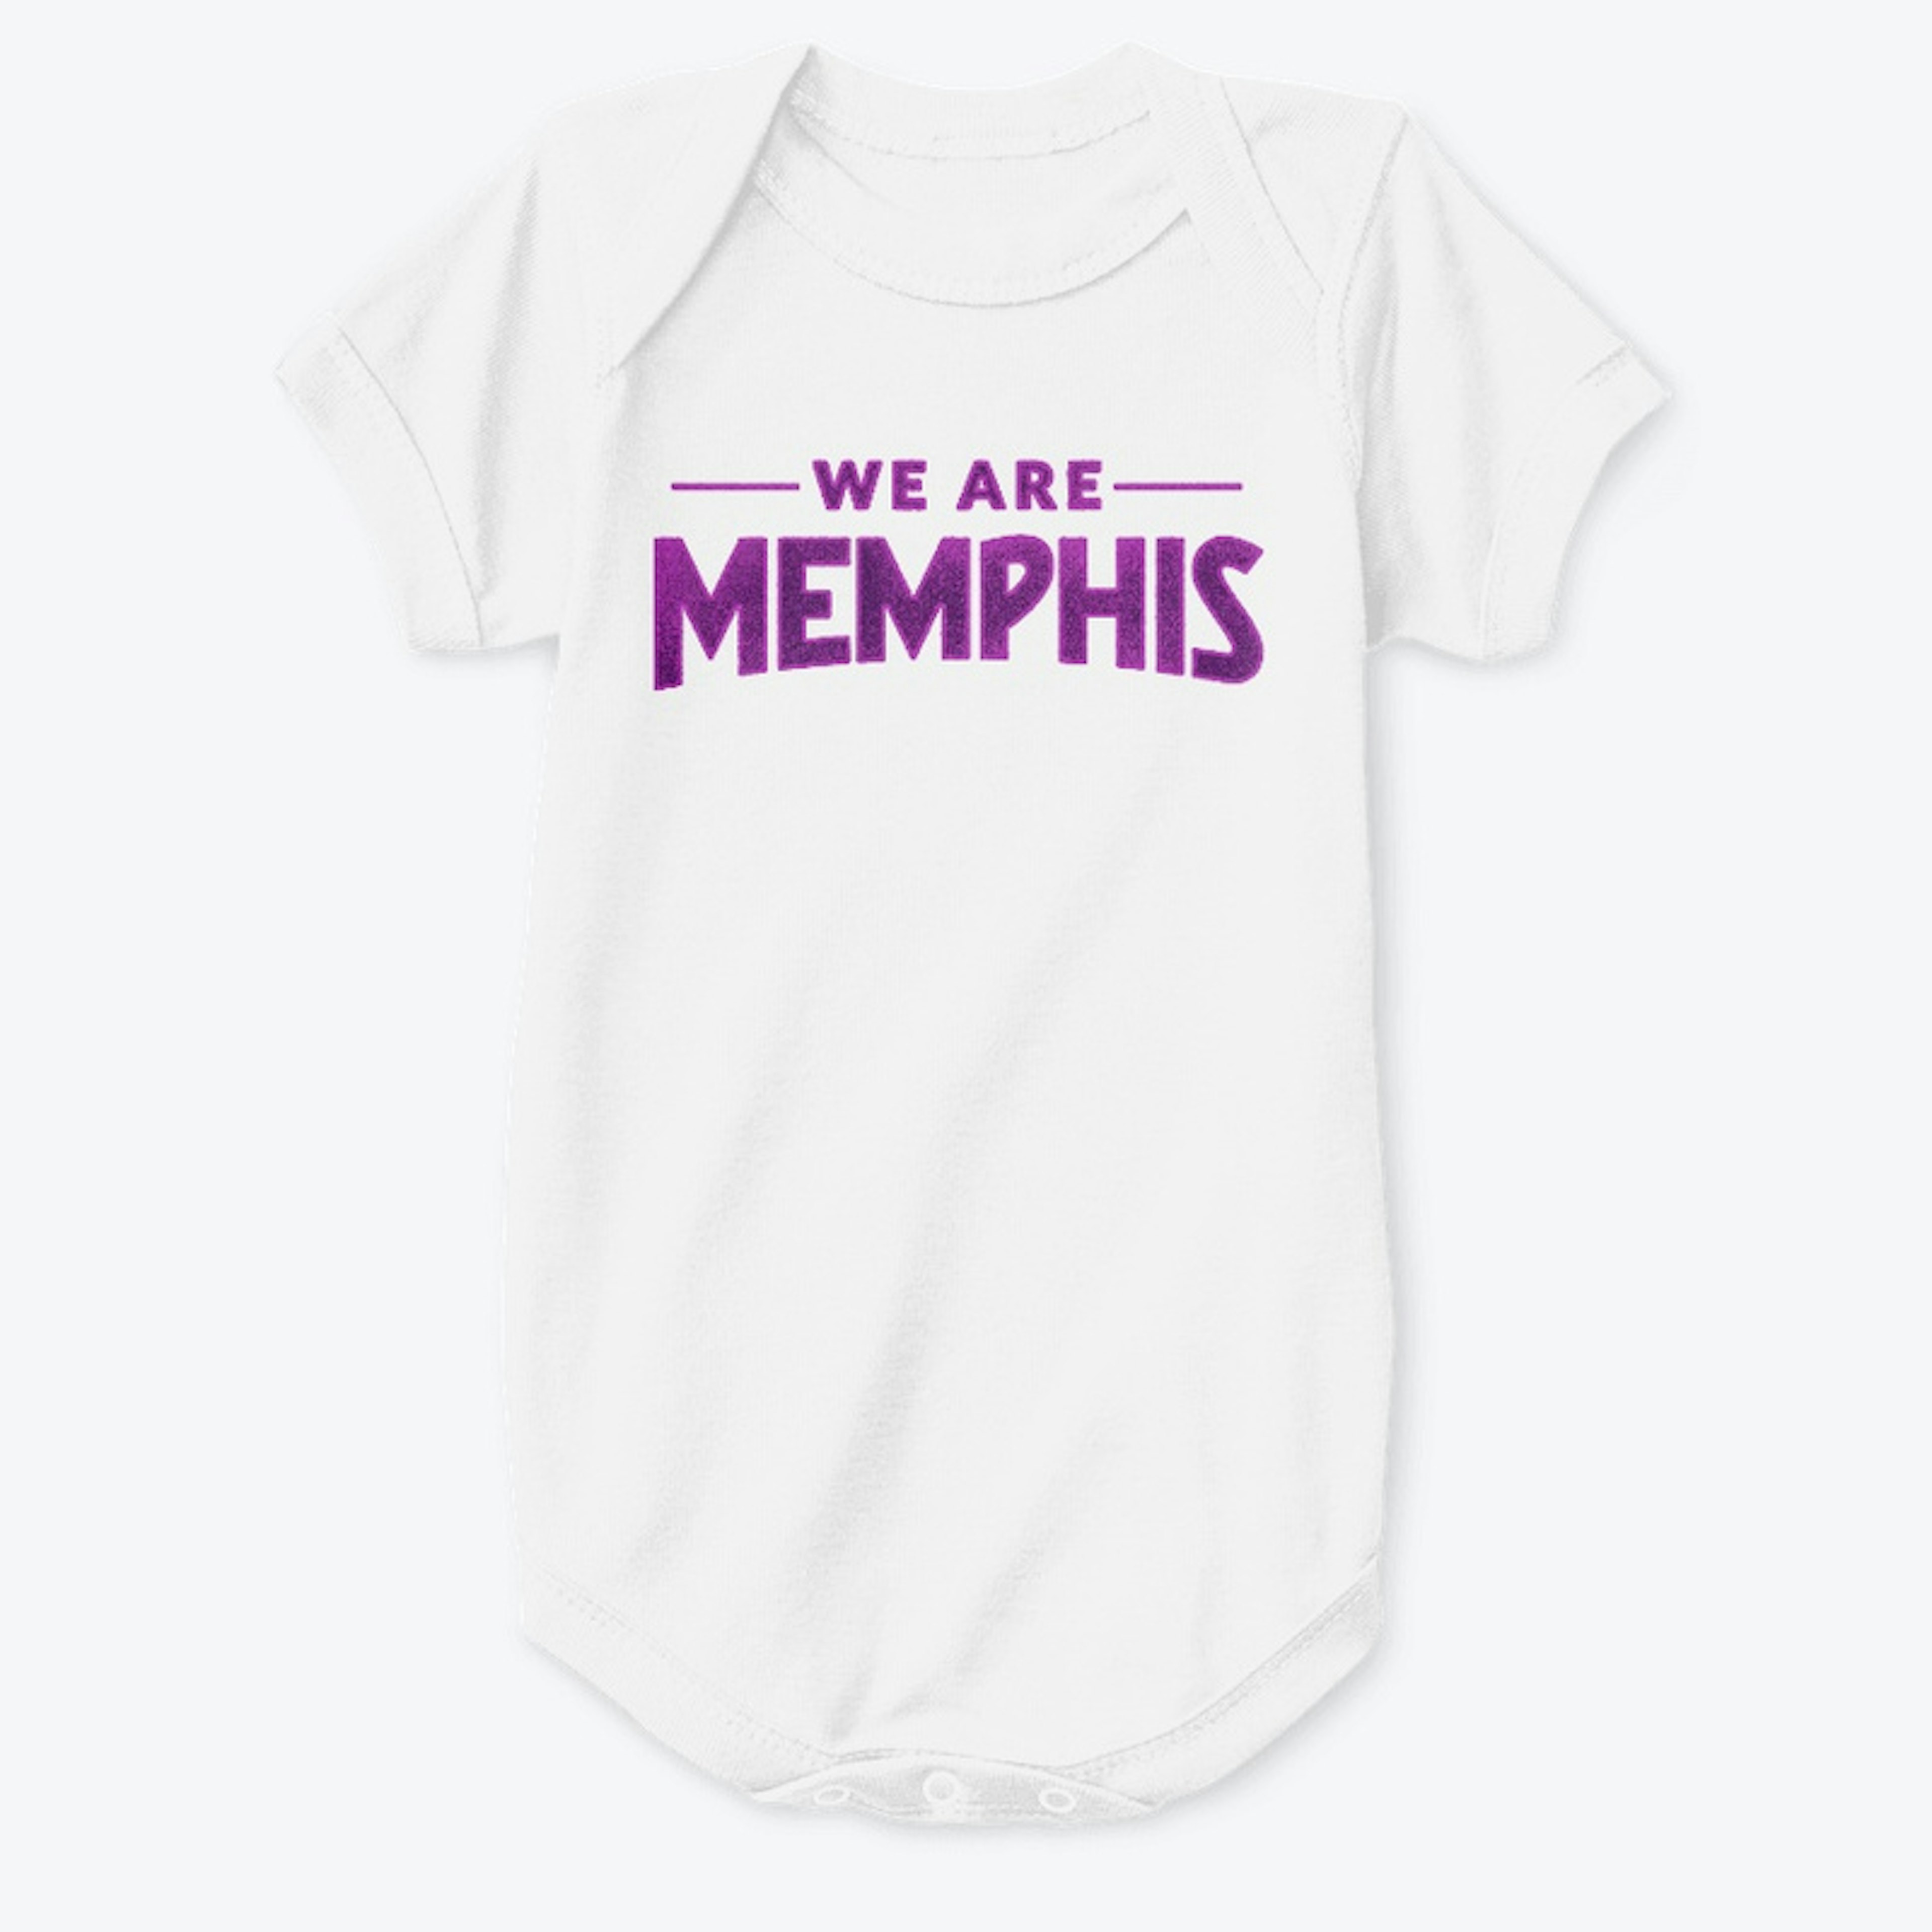 We Are Memphis Onesie